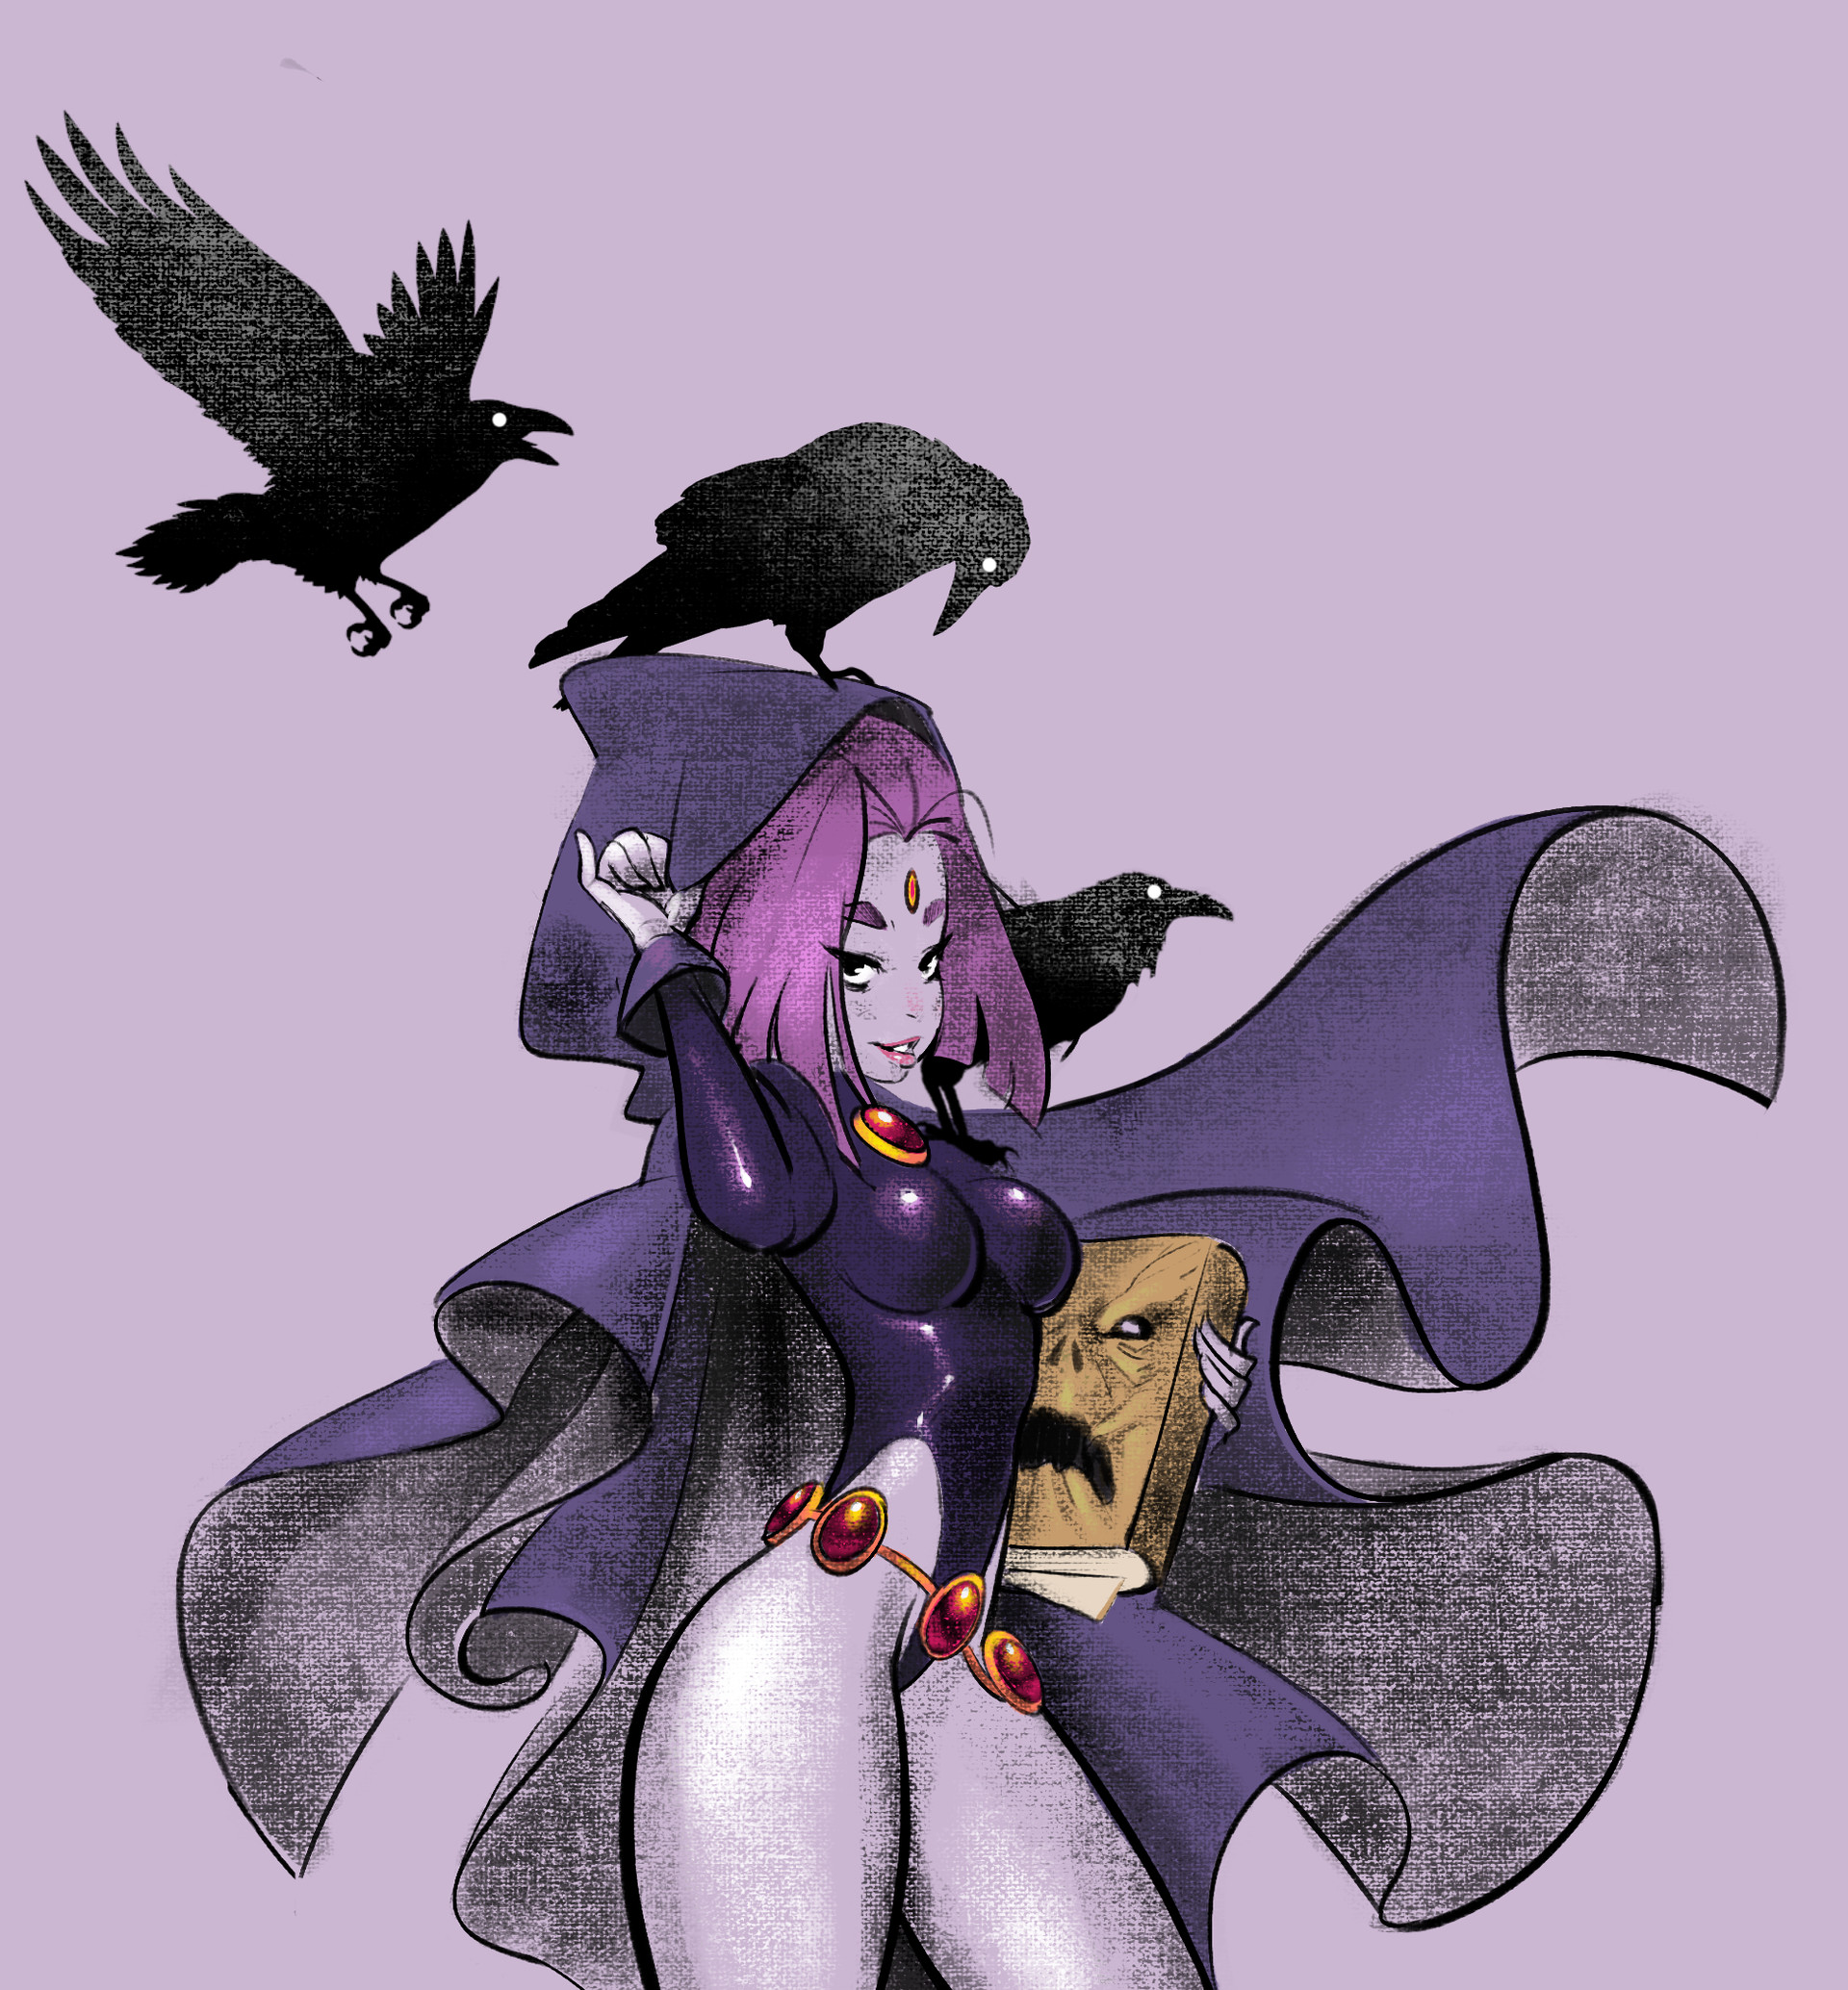 Raven monroe fan image